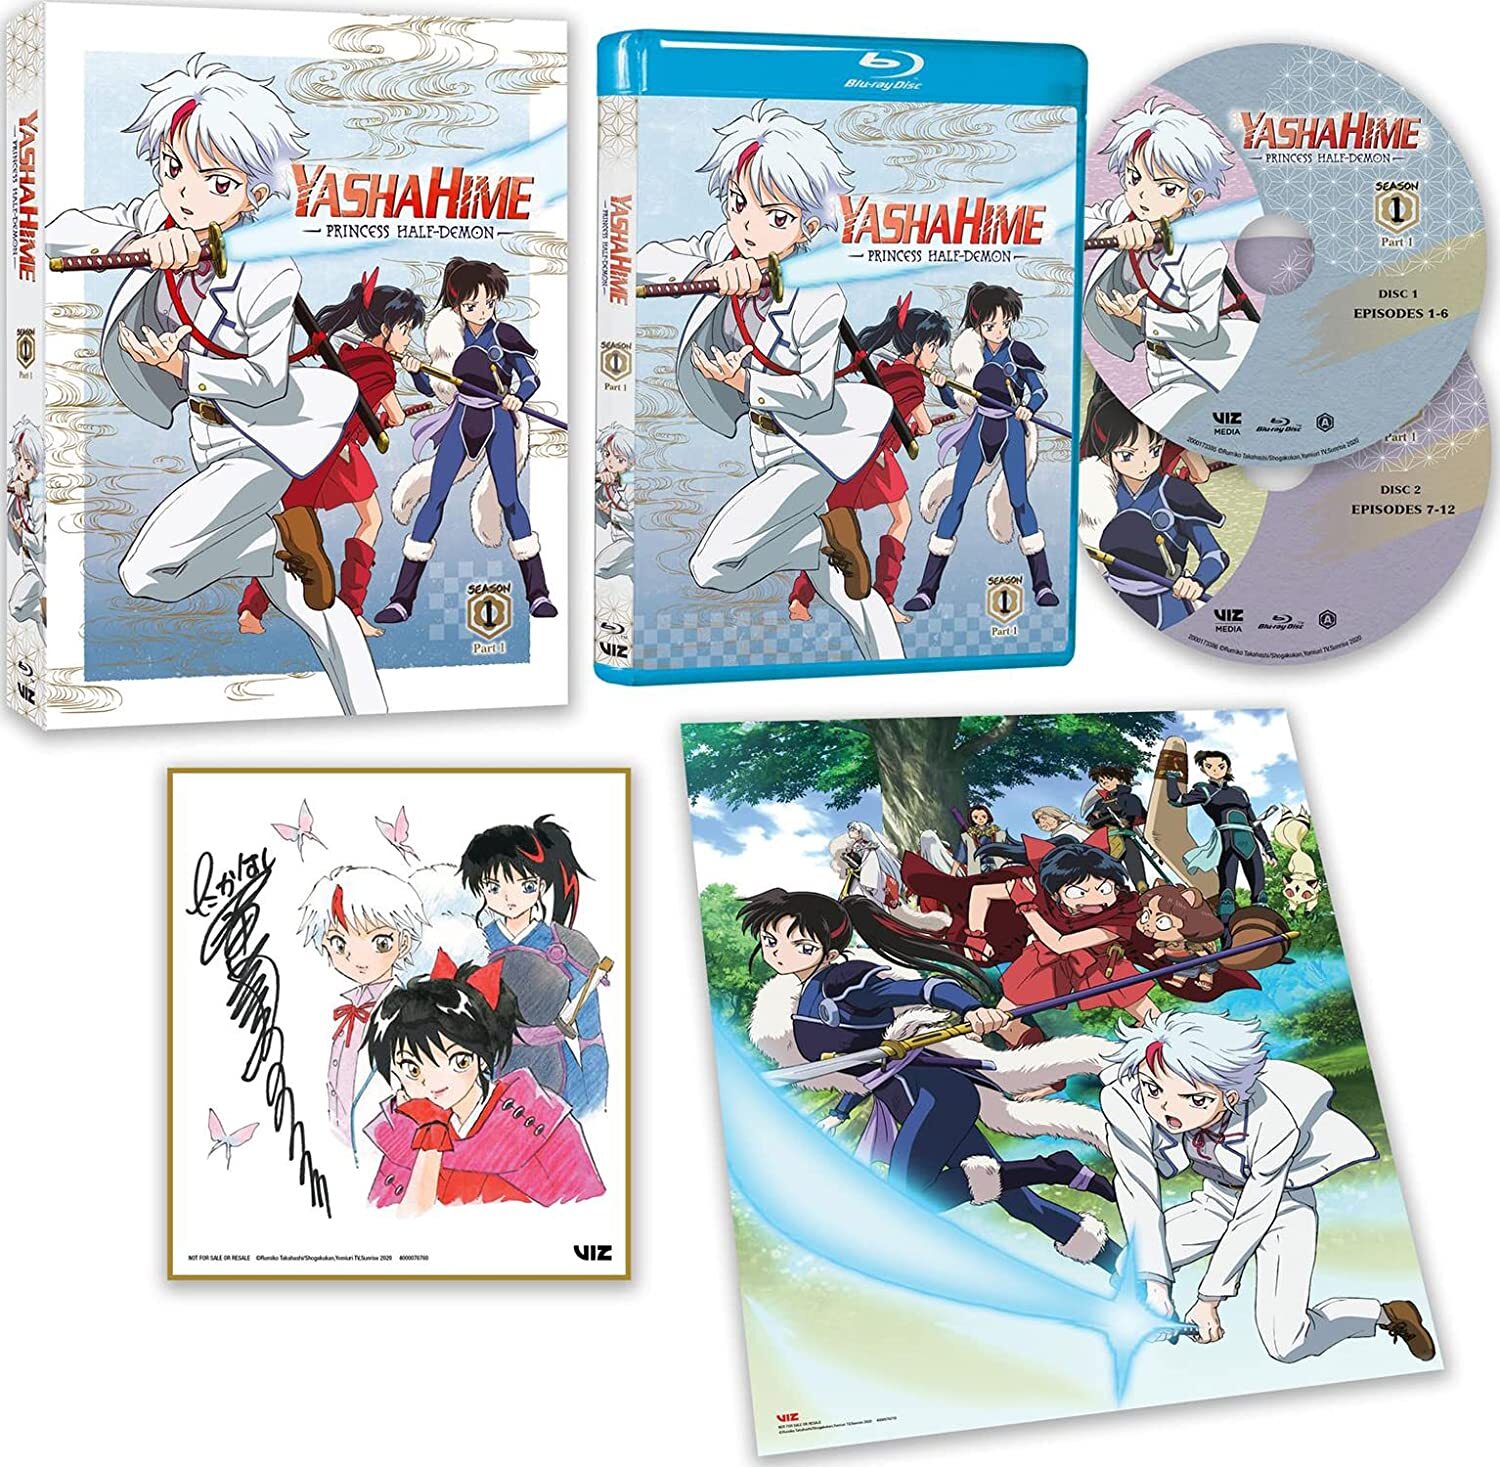  Yashahime: Princess Half-Demon Season 2 Part 2 (DVD) : Various,  Various: Movies & TV